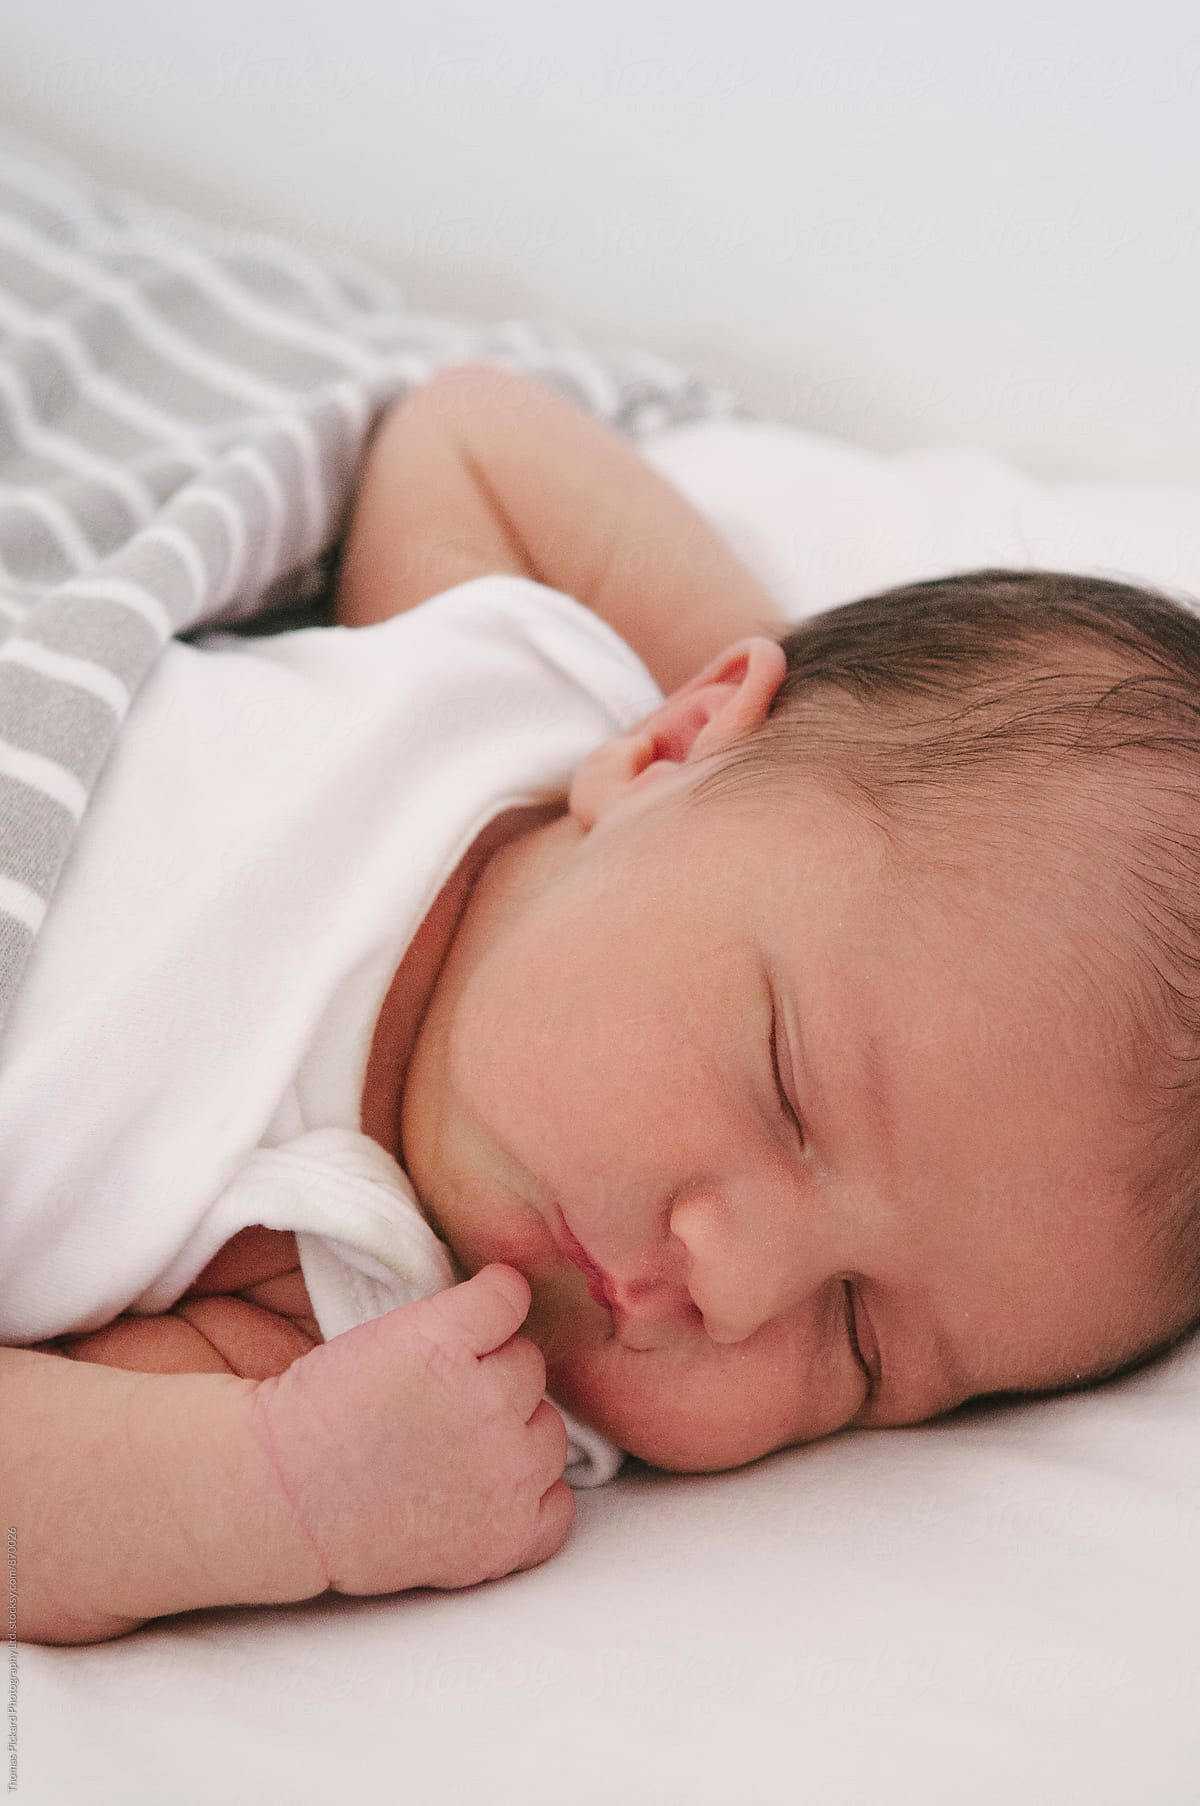 Newborn boy sleeping in a bassinet, New Zealand.